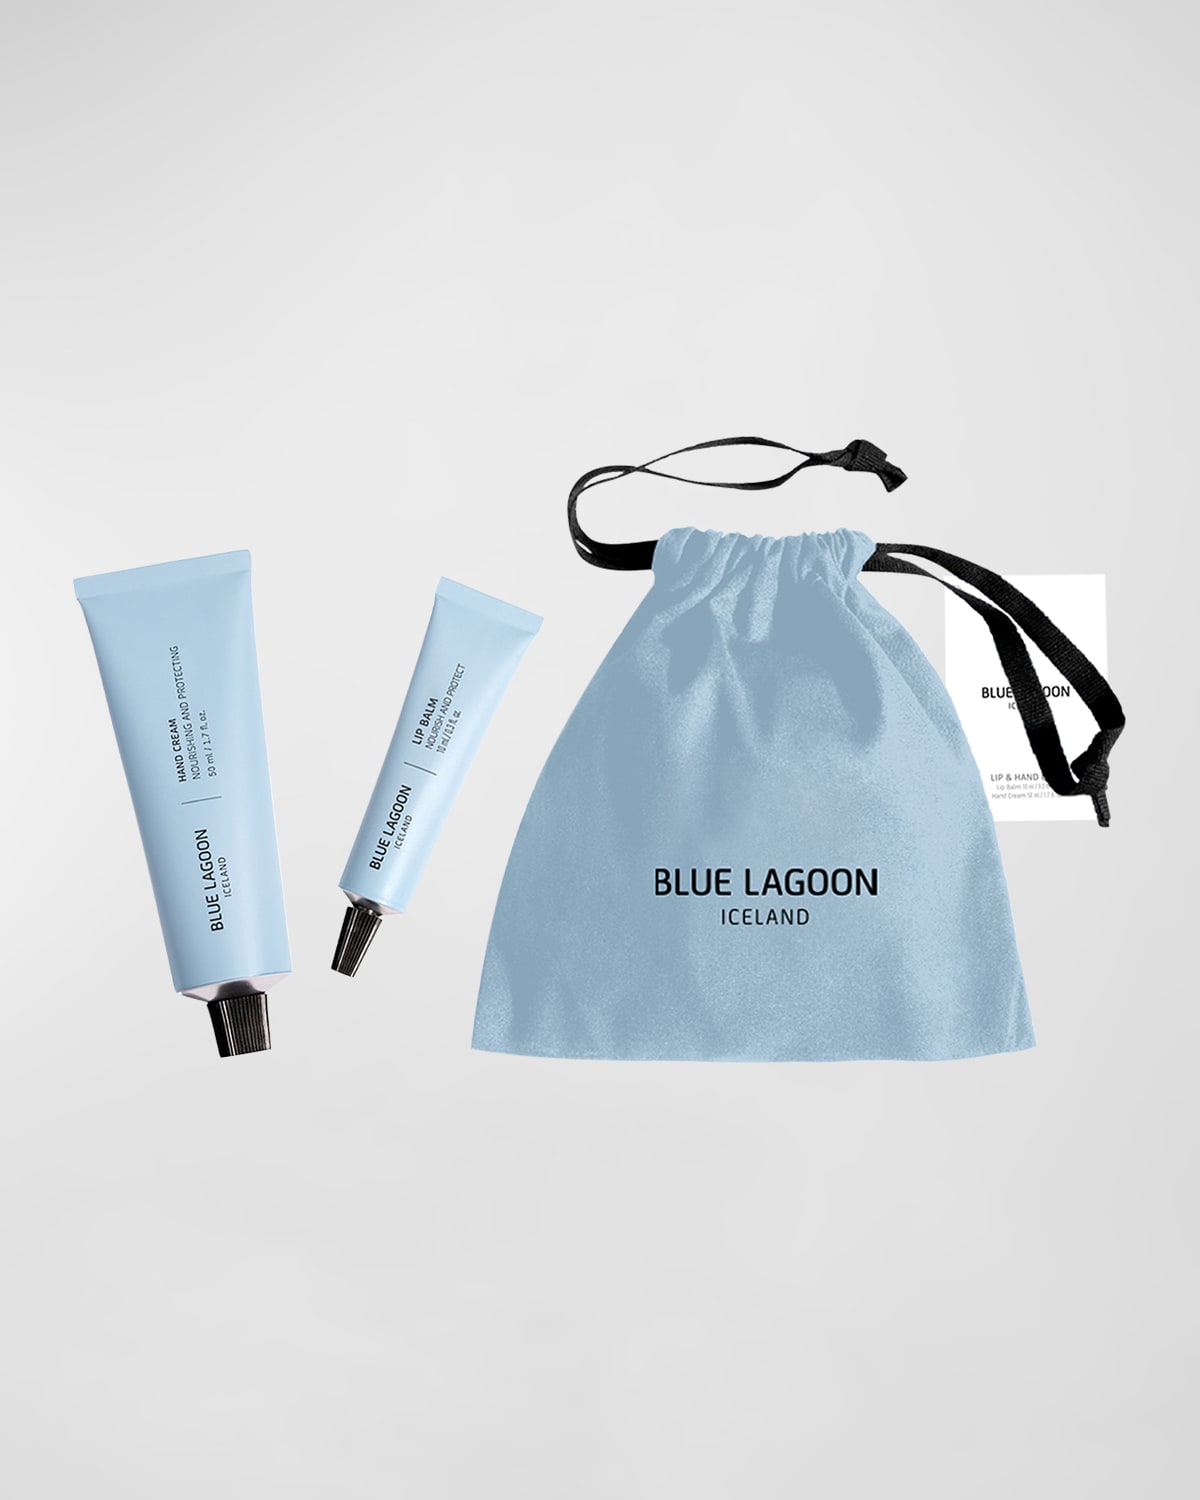 Blue Lagoon Iceland Hand Cream + Lip Balm Kit In White